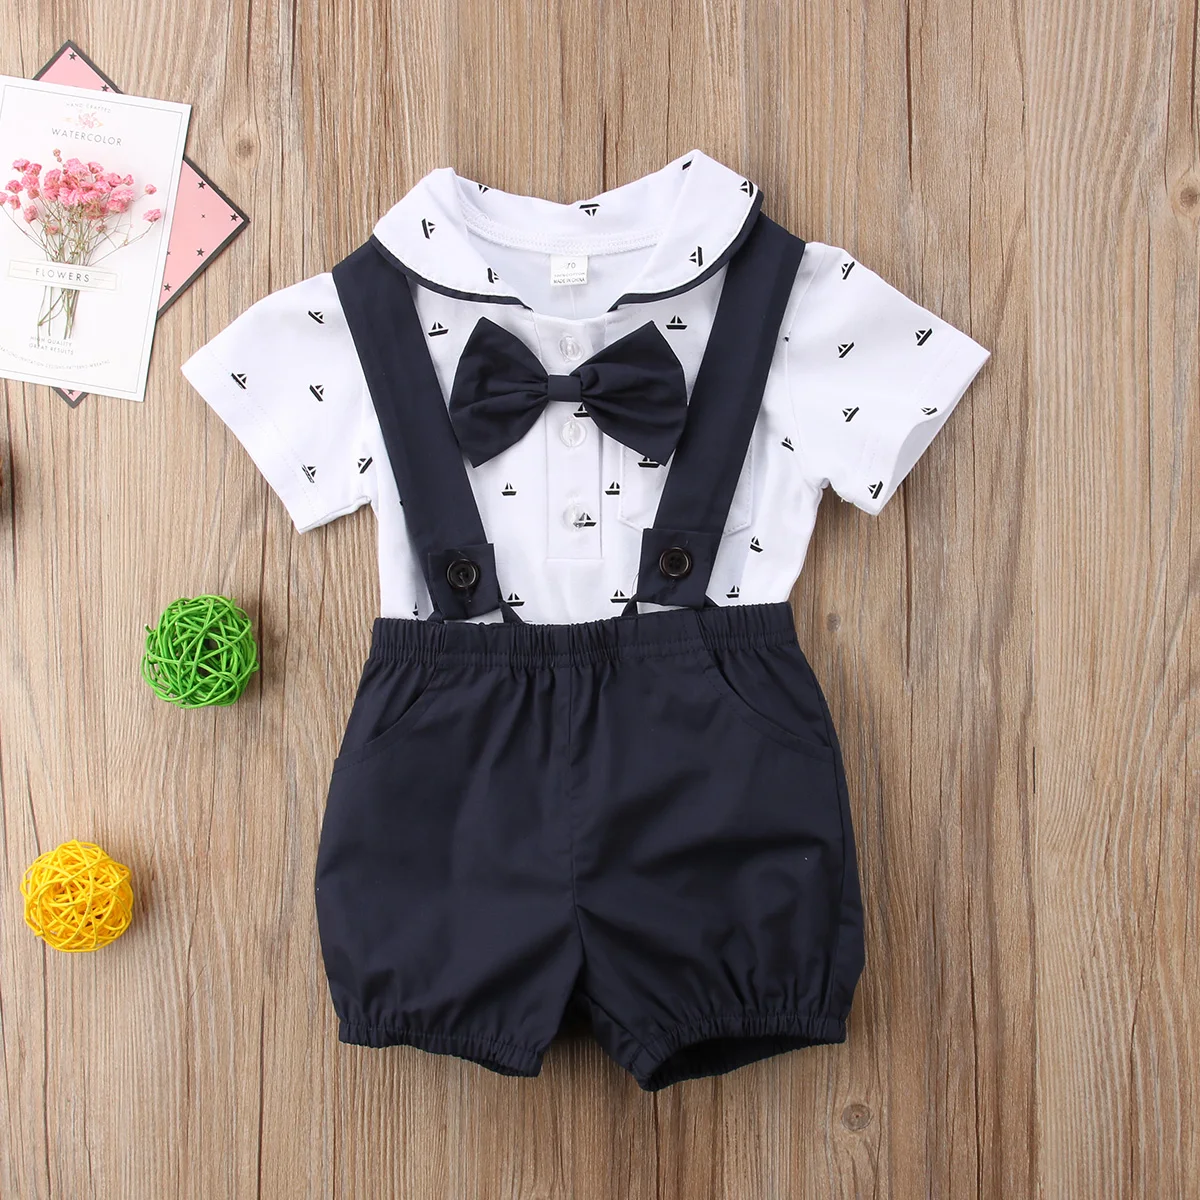 

Infant Baby Boy Clothes Wedding Formal Suit Bowtie Gentleman Romper Suspenders Short Pant Outfit 0-24M Newborn